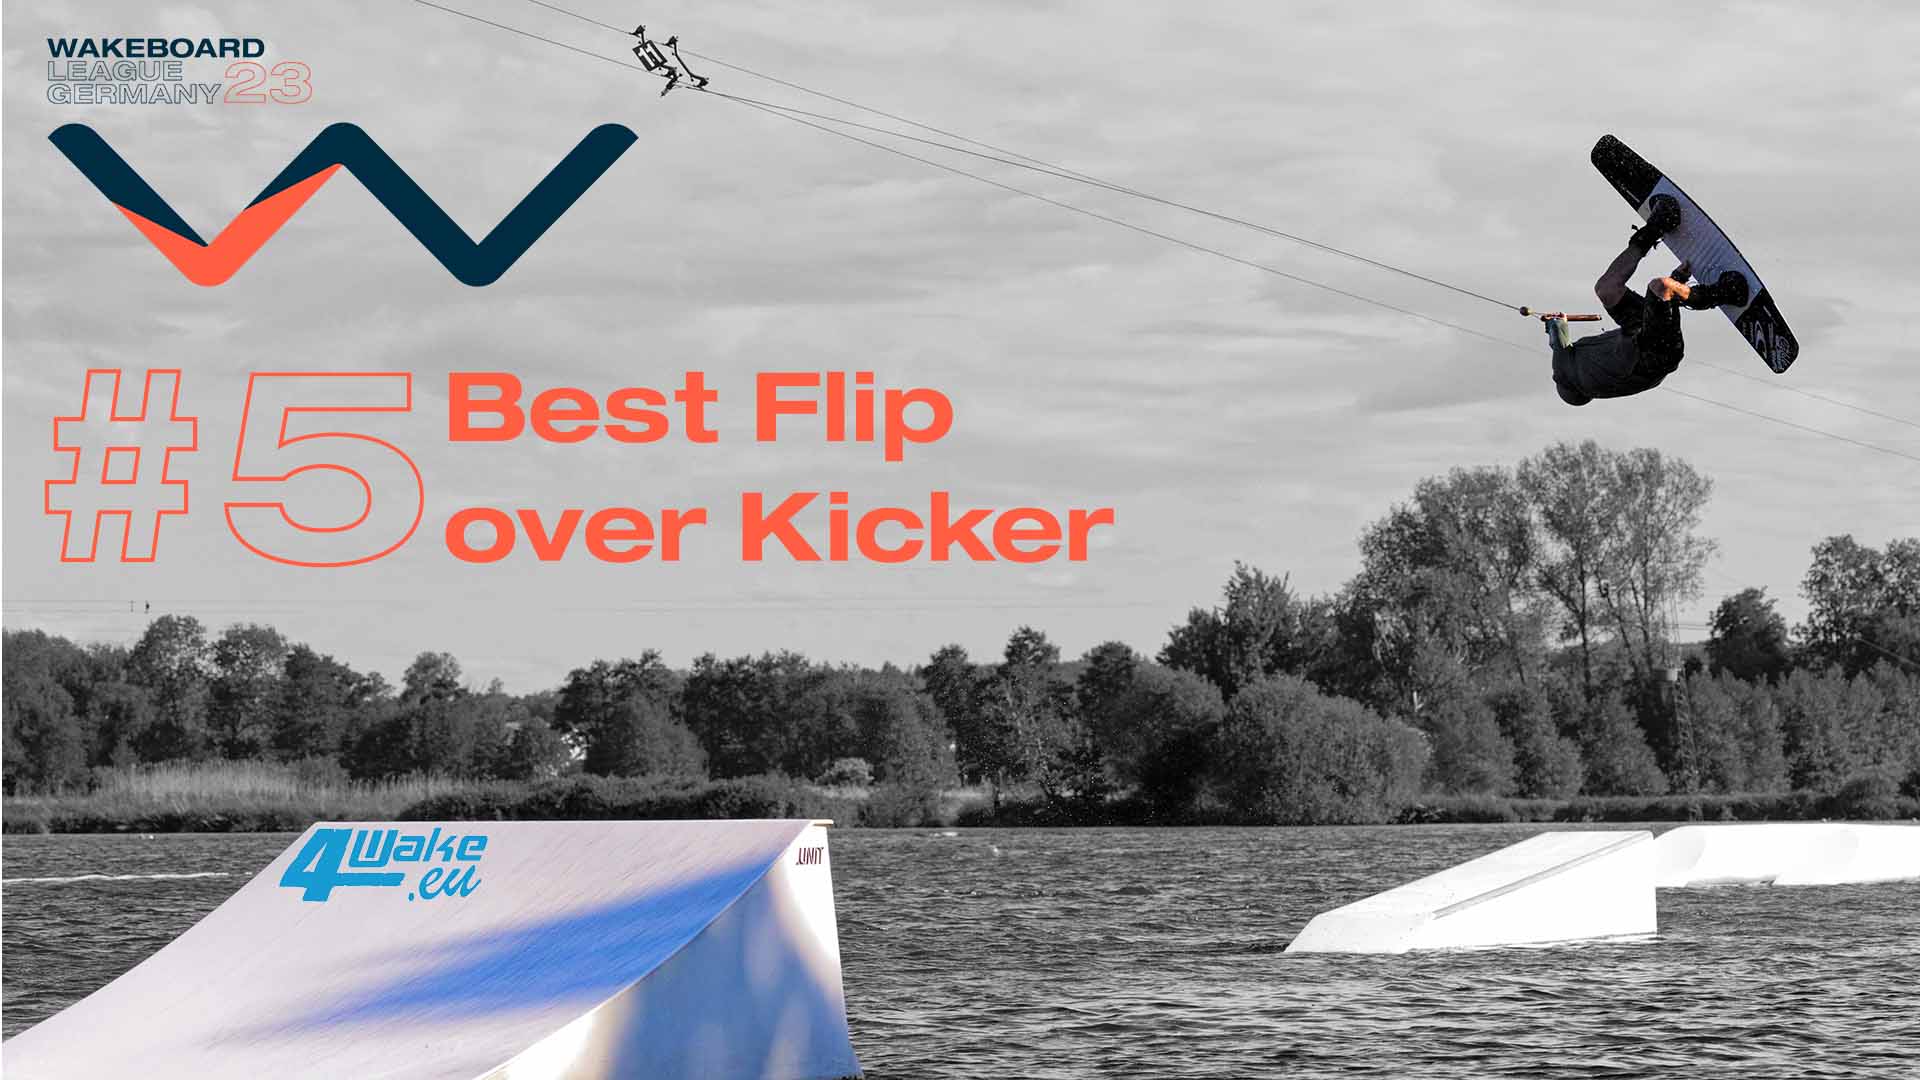 WLG23 #5 Best Flip over Kicker